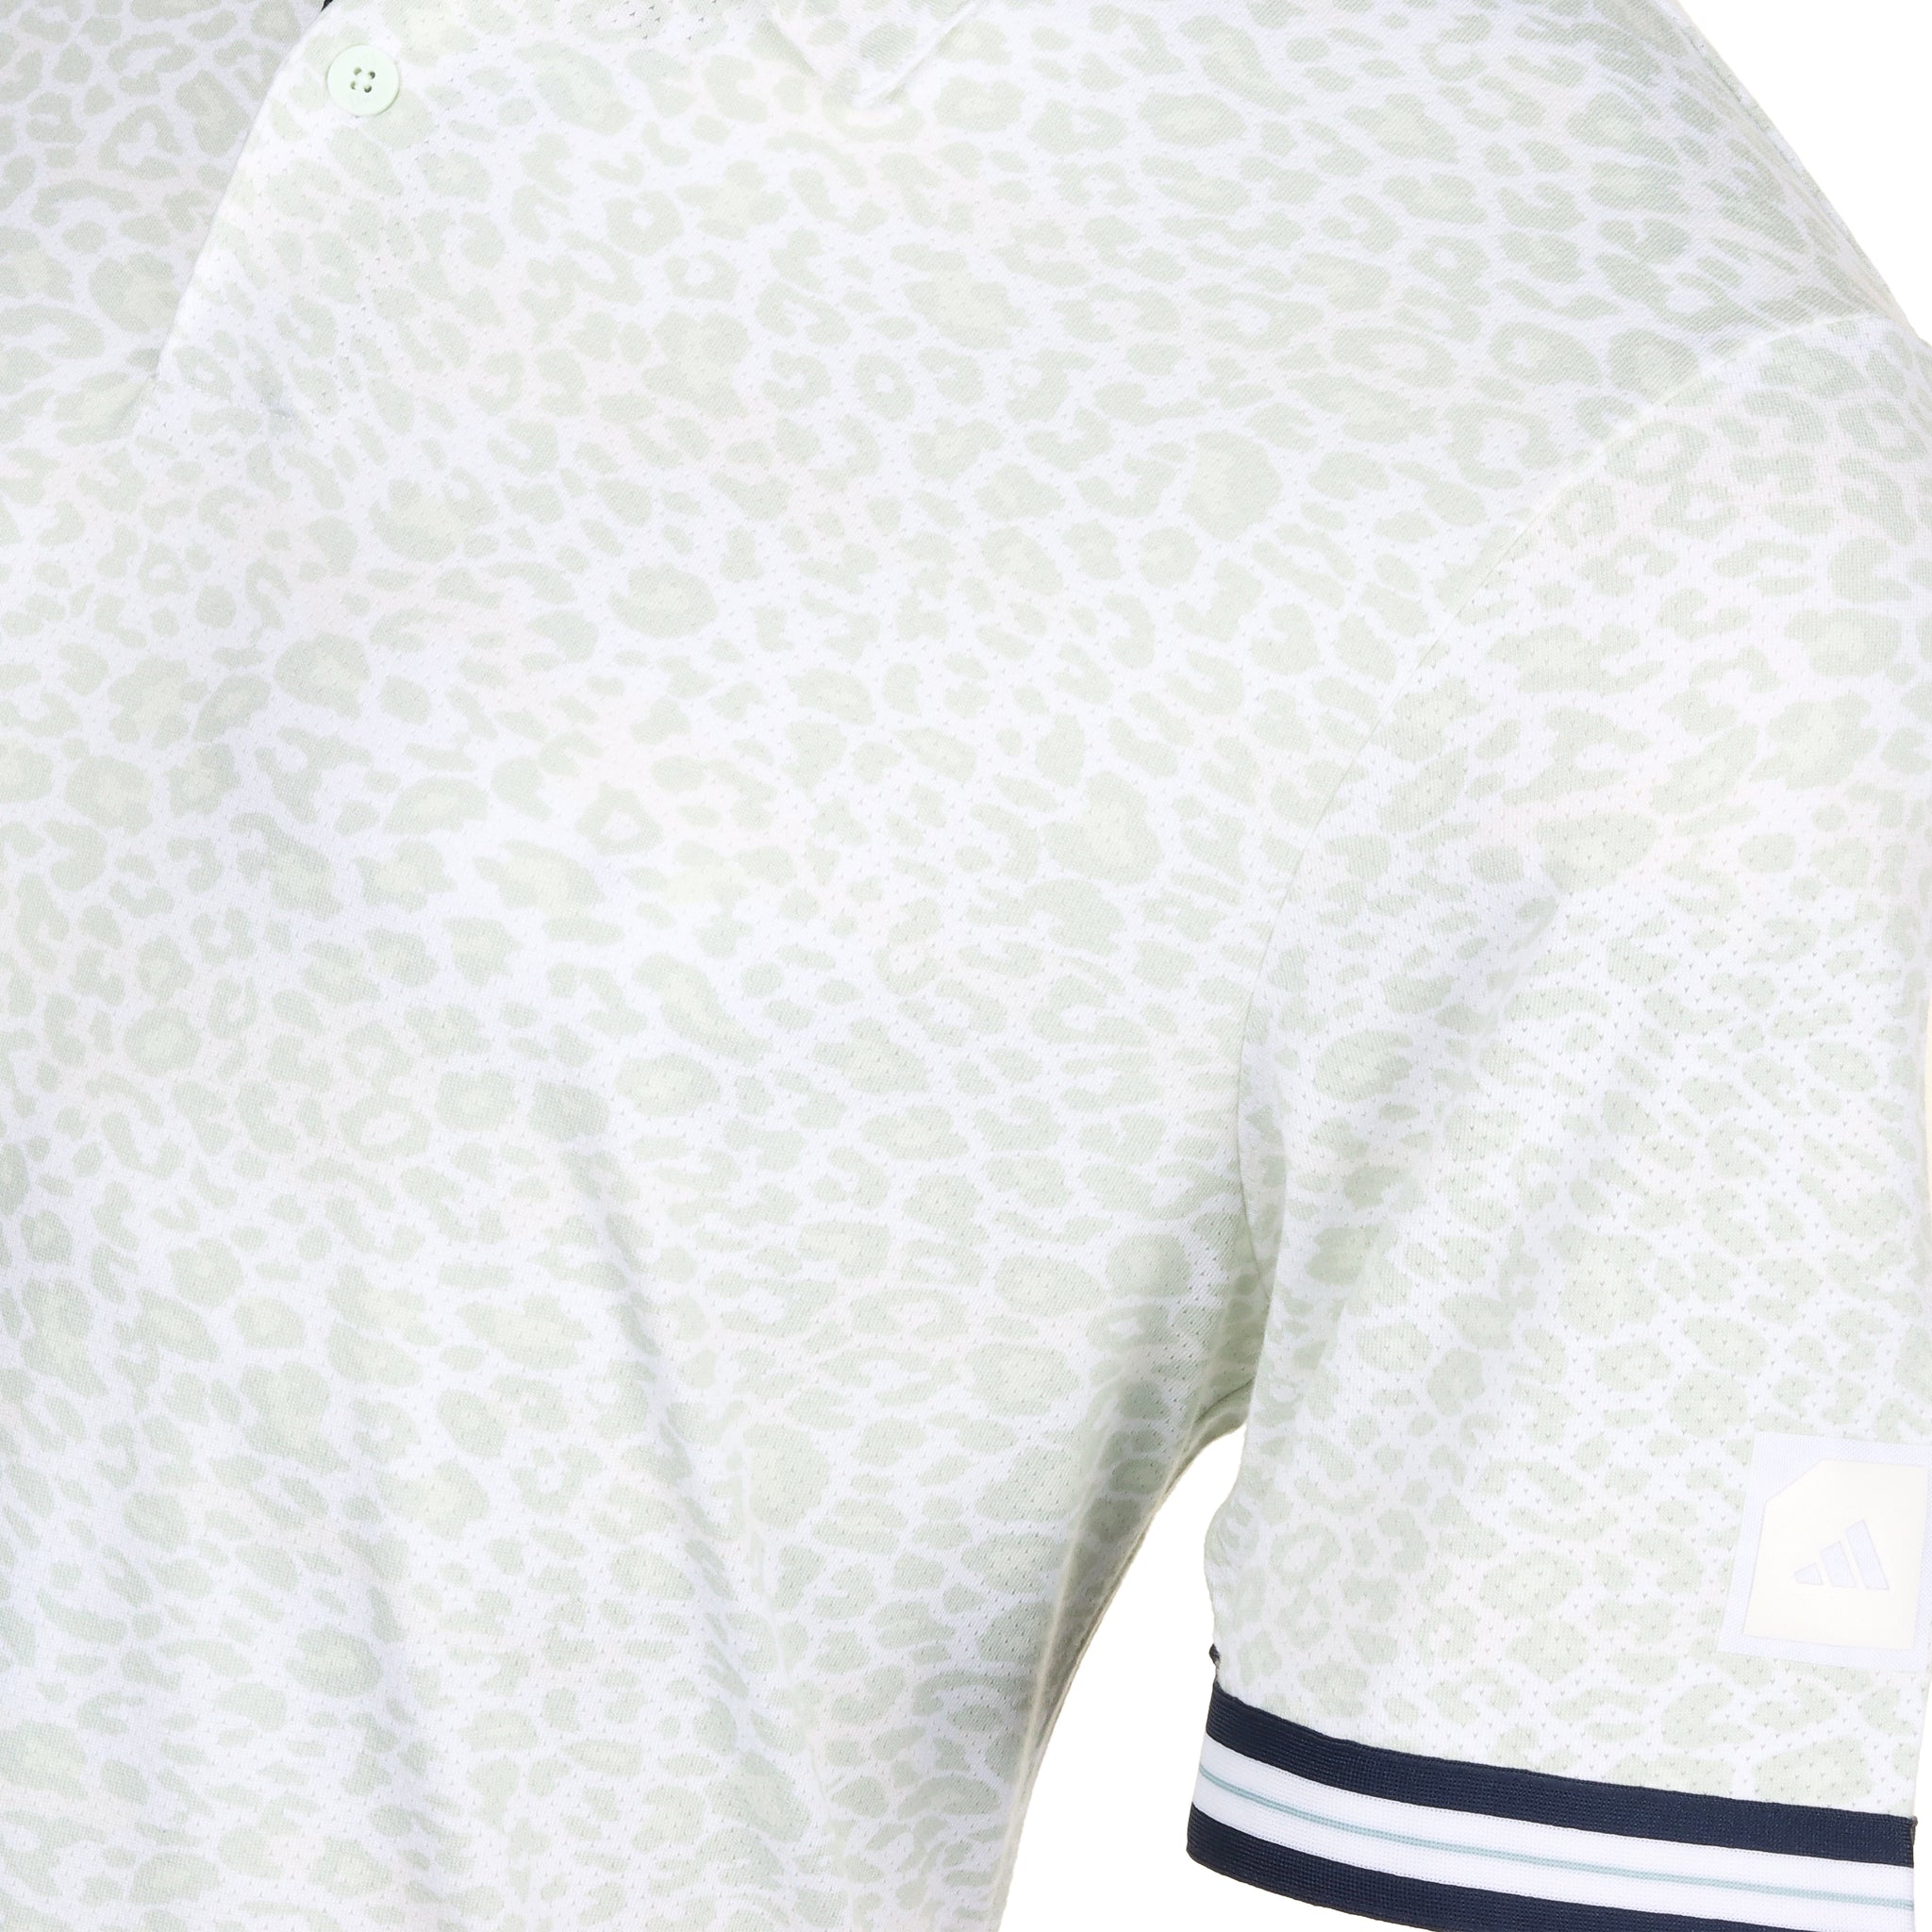 adidas-golf-adicross-print-shirt-in9253-white